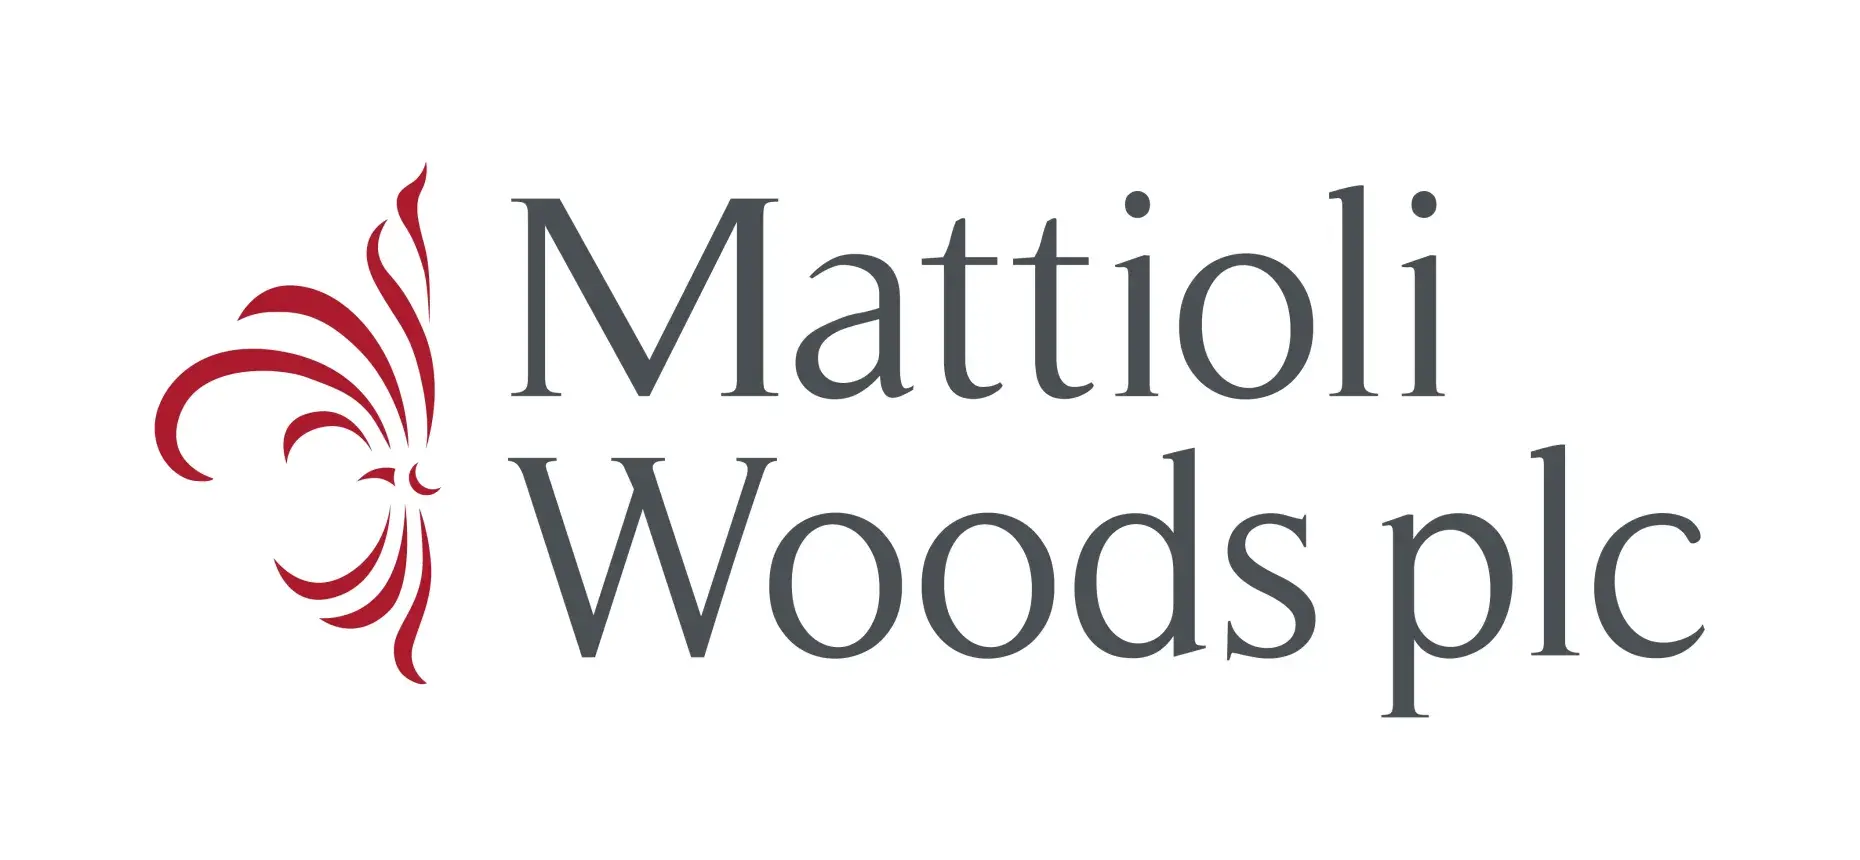 mattioli woods plc